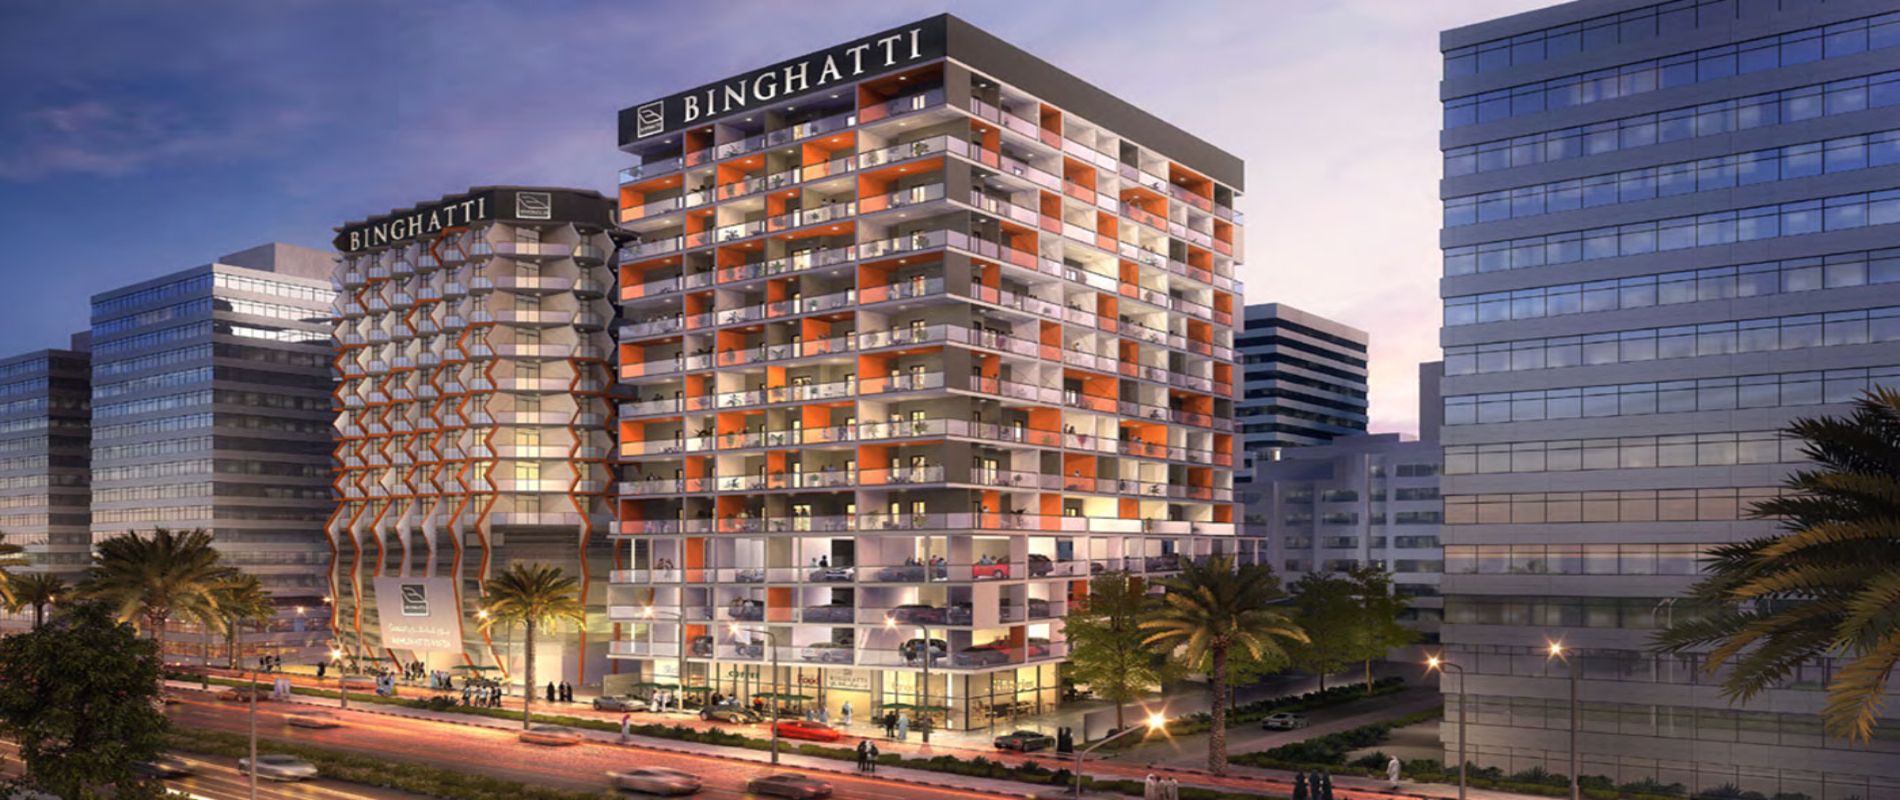 Binghatti Canal Apartments - Business Bay Dubai.